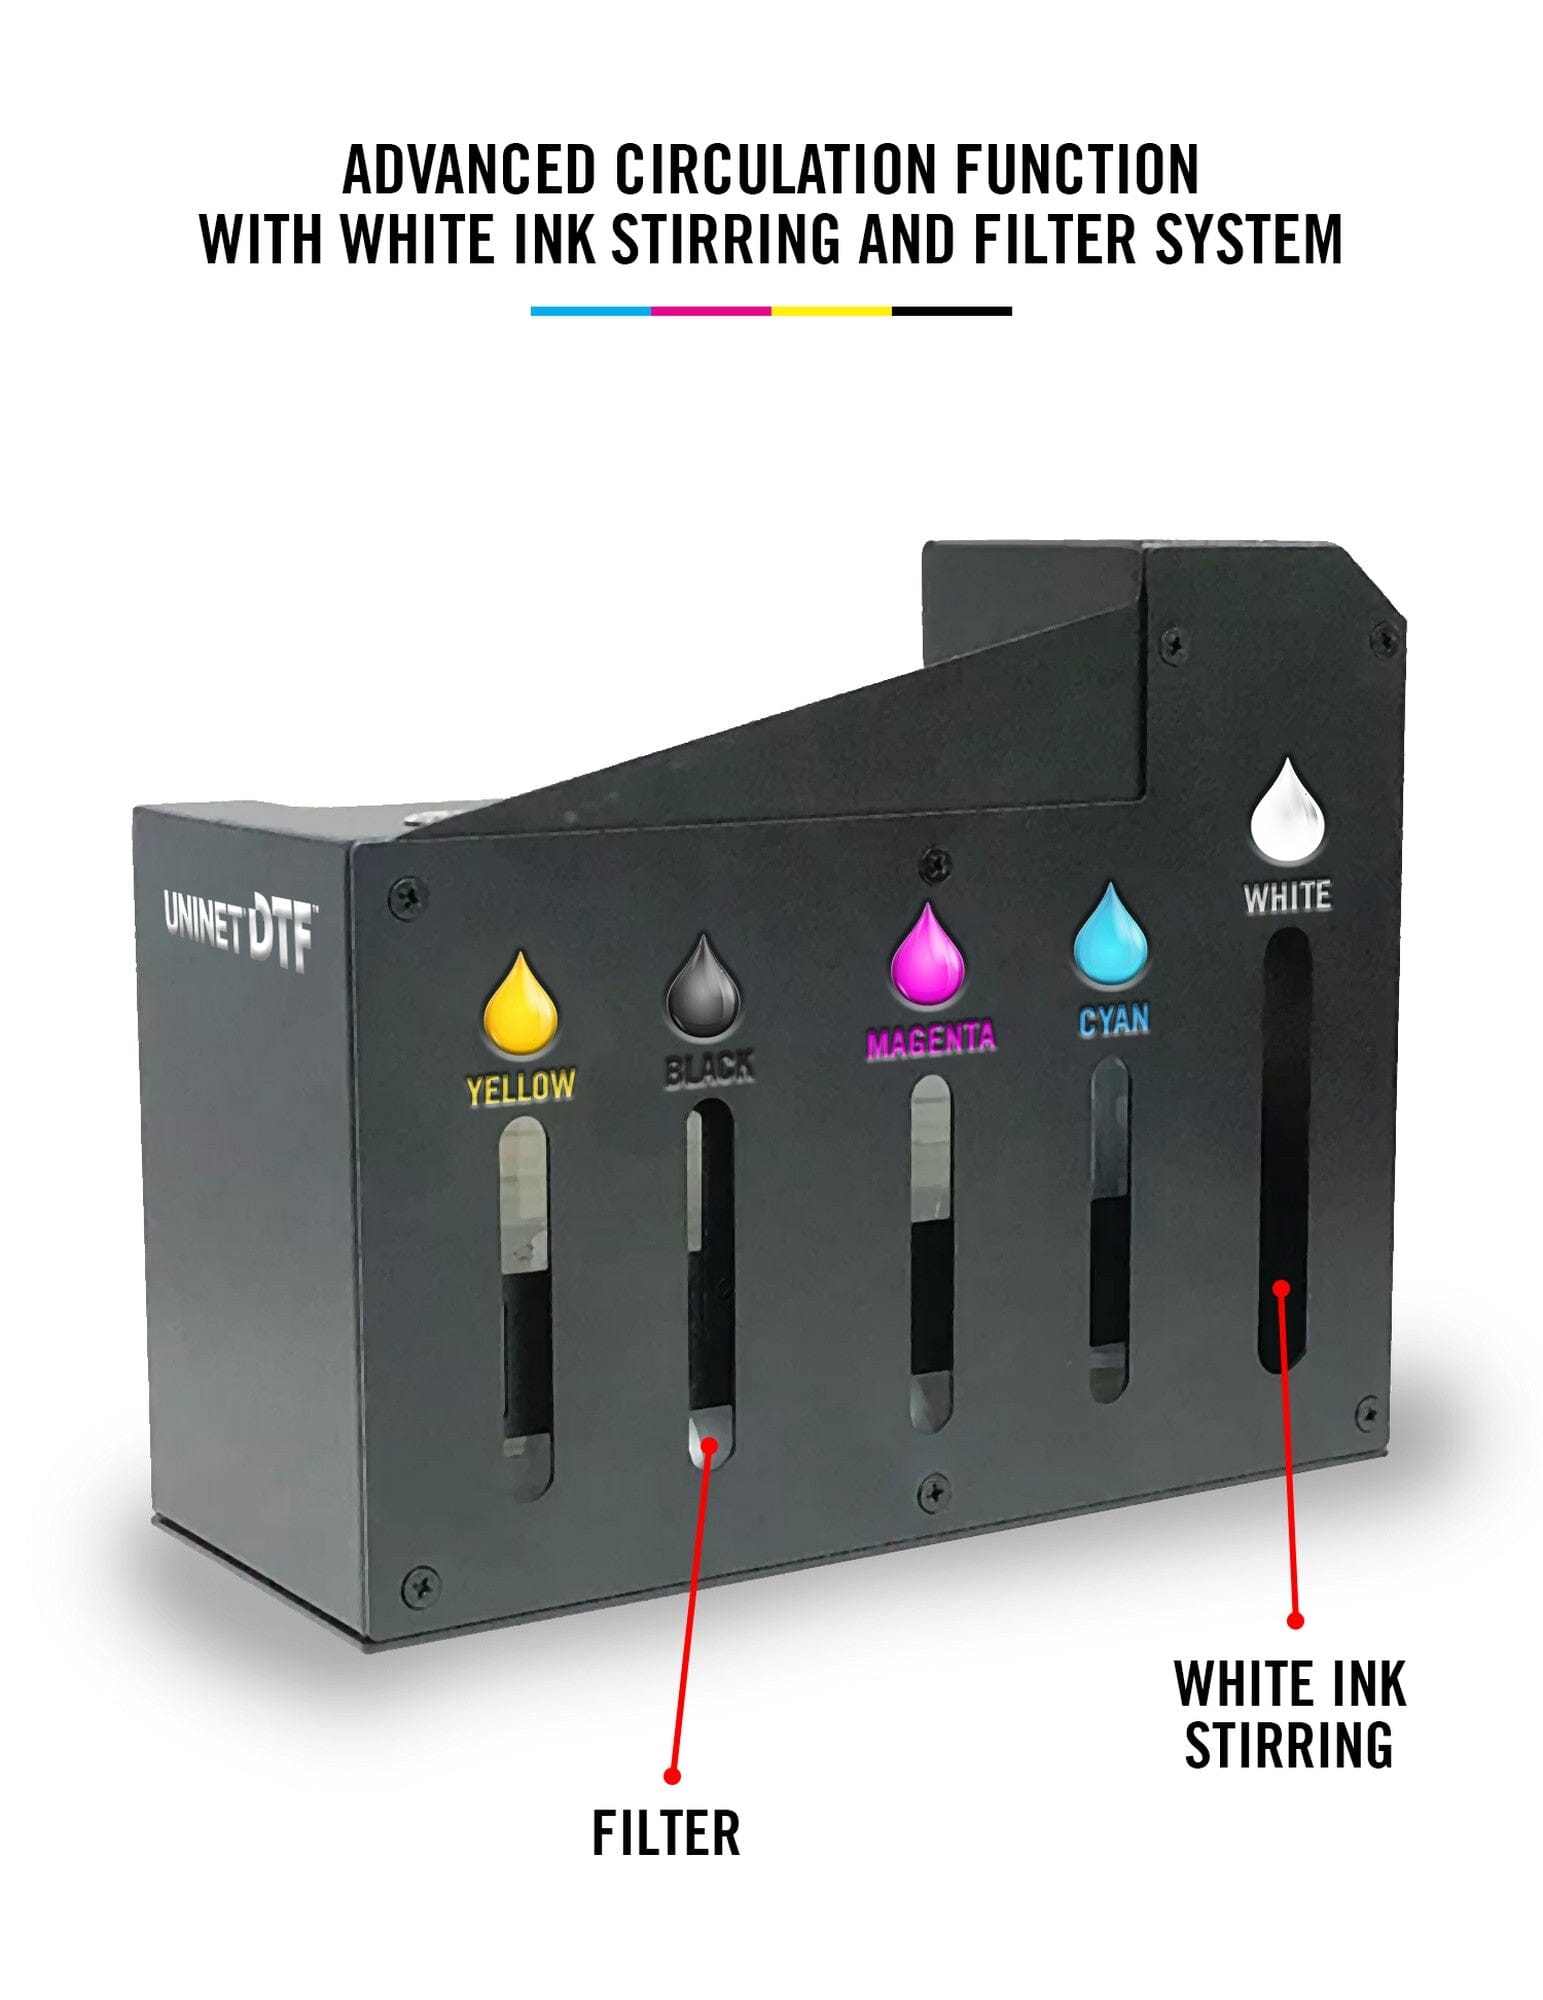 Uninet 100 Direct to Film (DTF) A3+ Sheet Printer, Training & Supplies & Heat Press